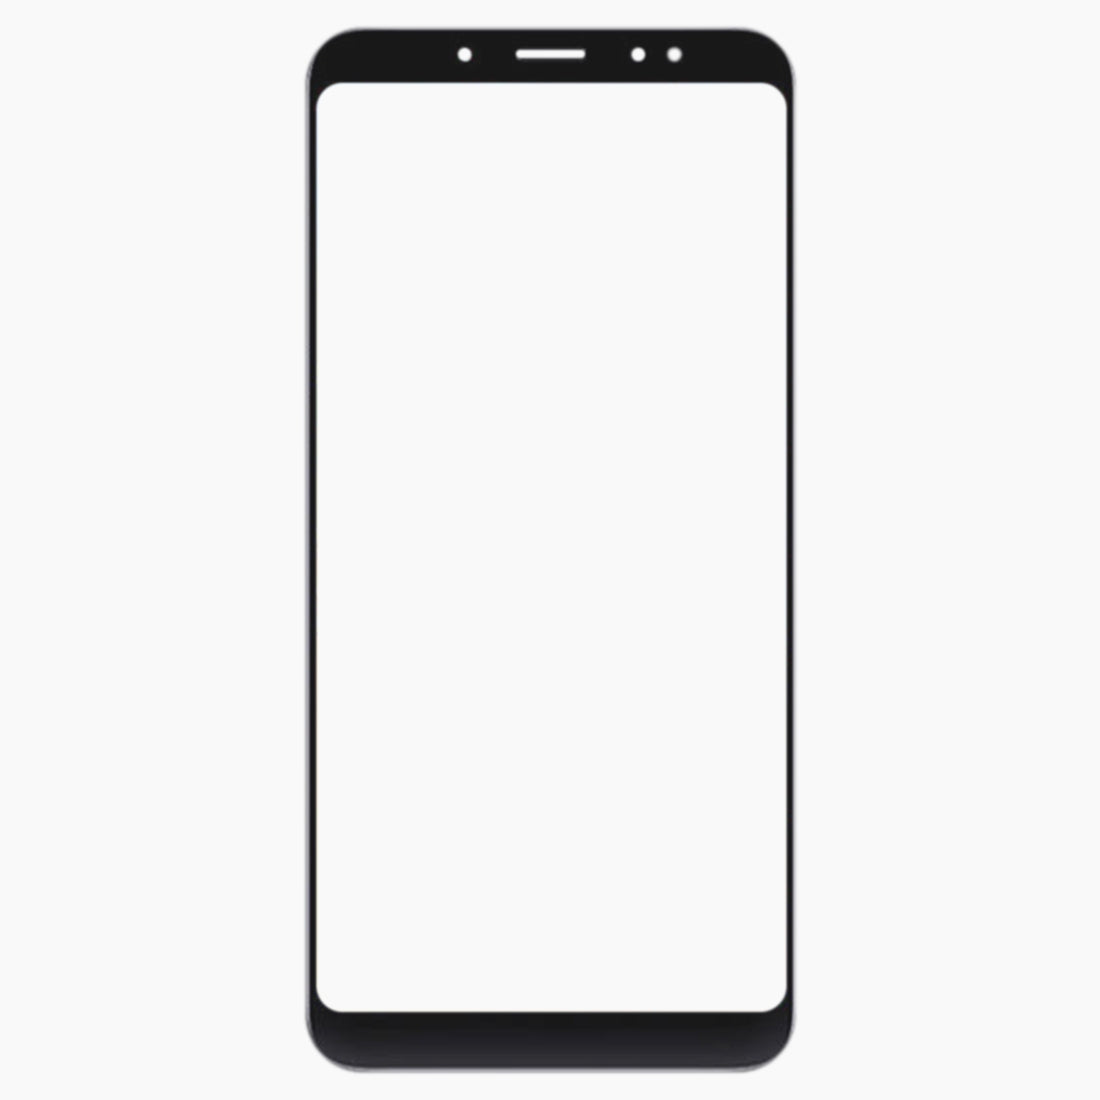 Cristal Pantalla Frontal + Adhesivo OCA Xiaomi Redmi Note 5 Negro